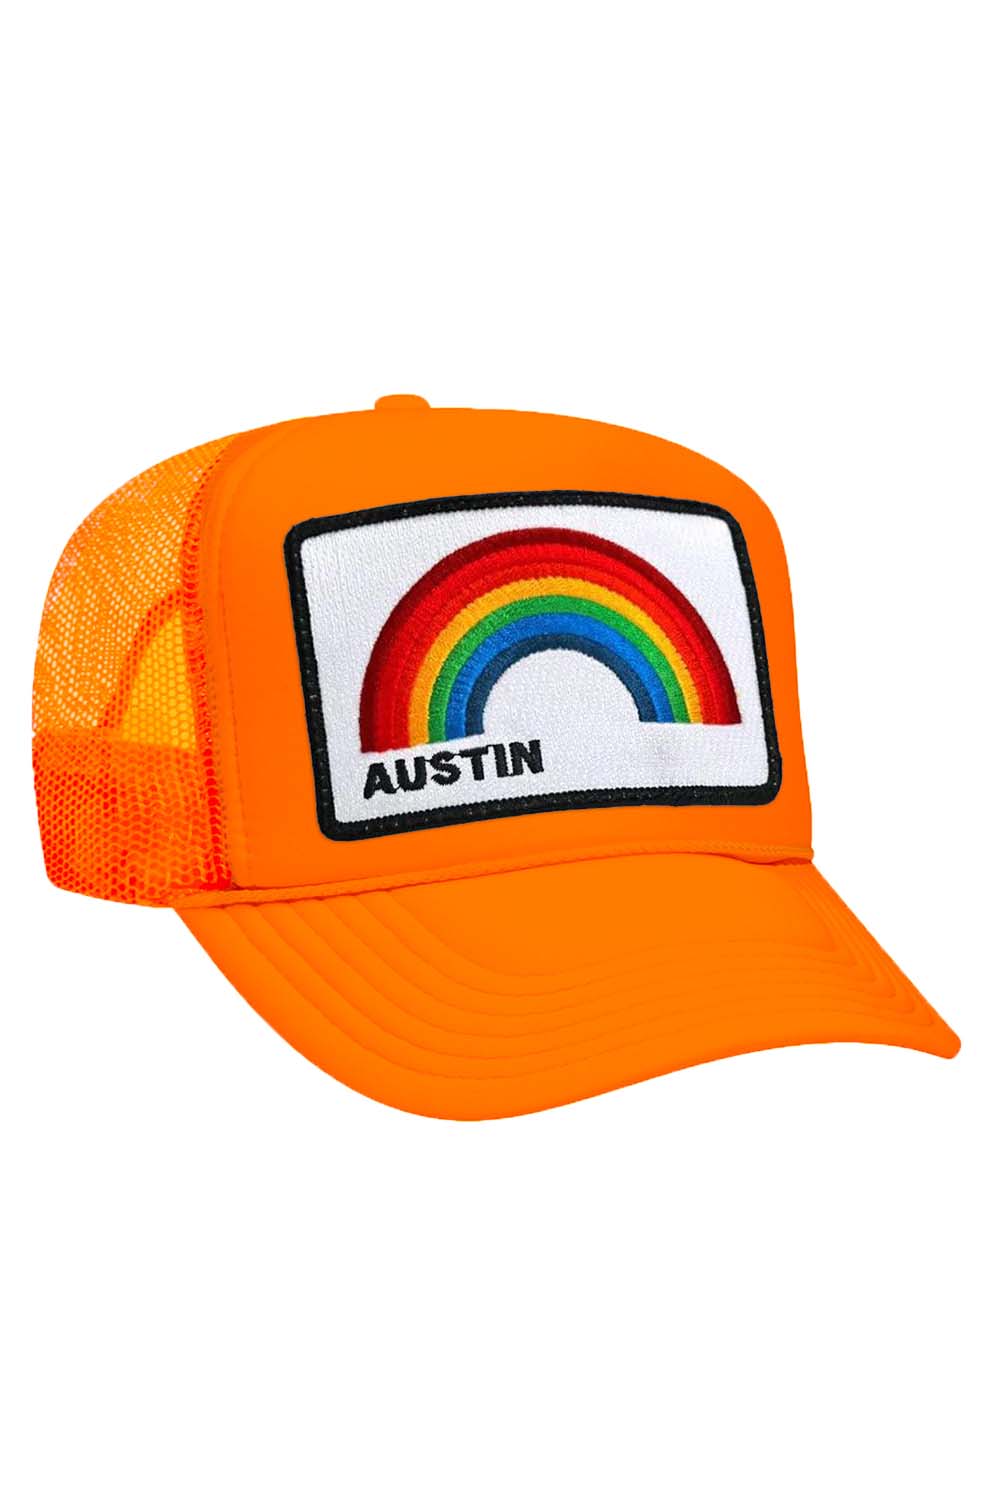 AUSTIN RAINBOW TRUCKER HAT HATS Aviator Nation OS NEON ORAGE 